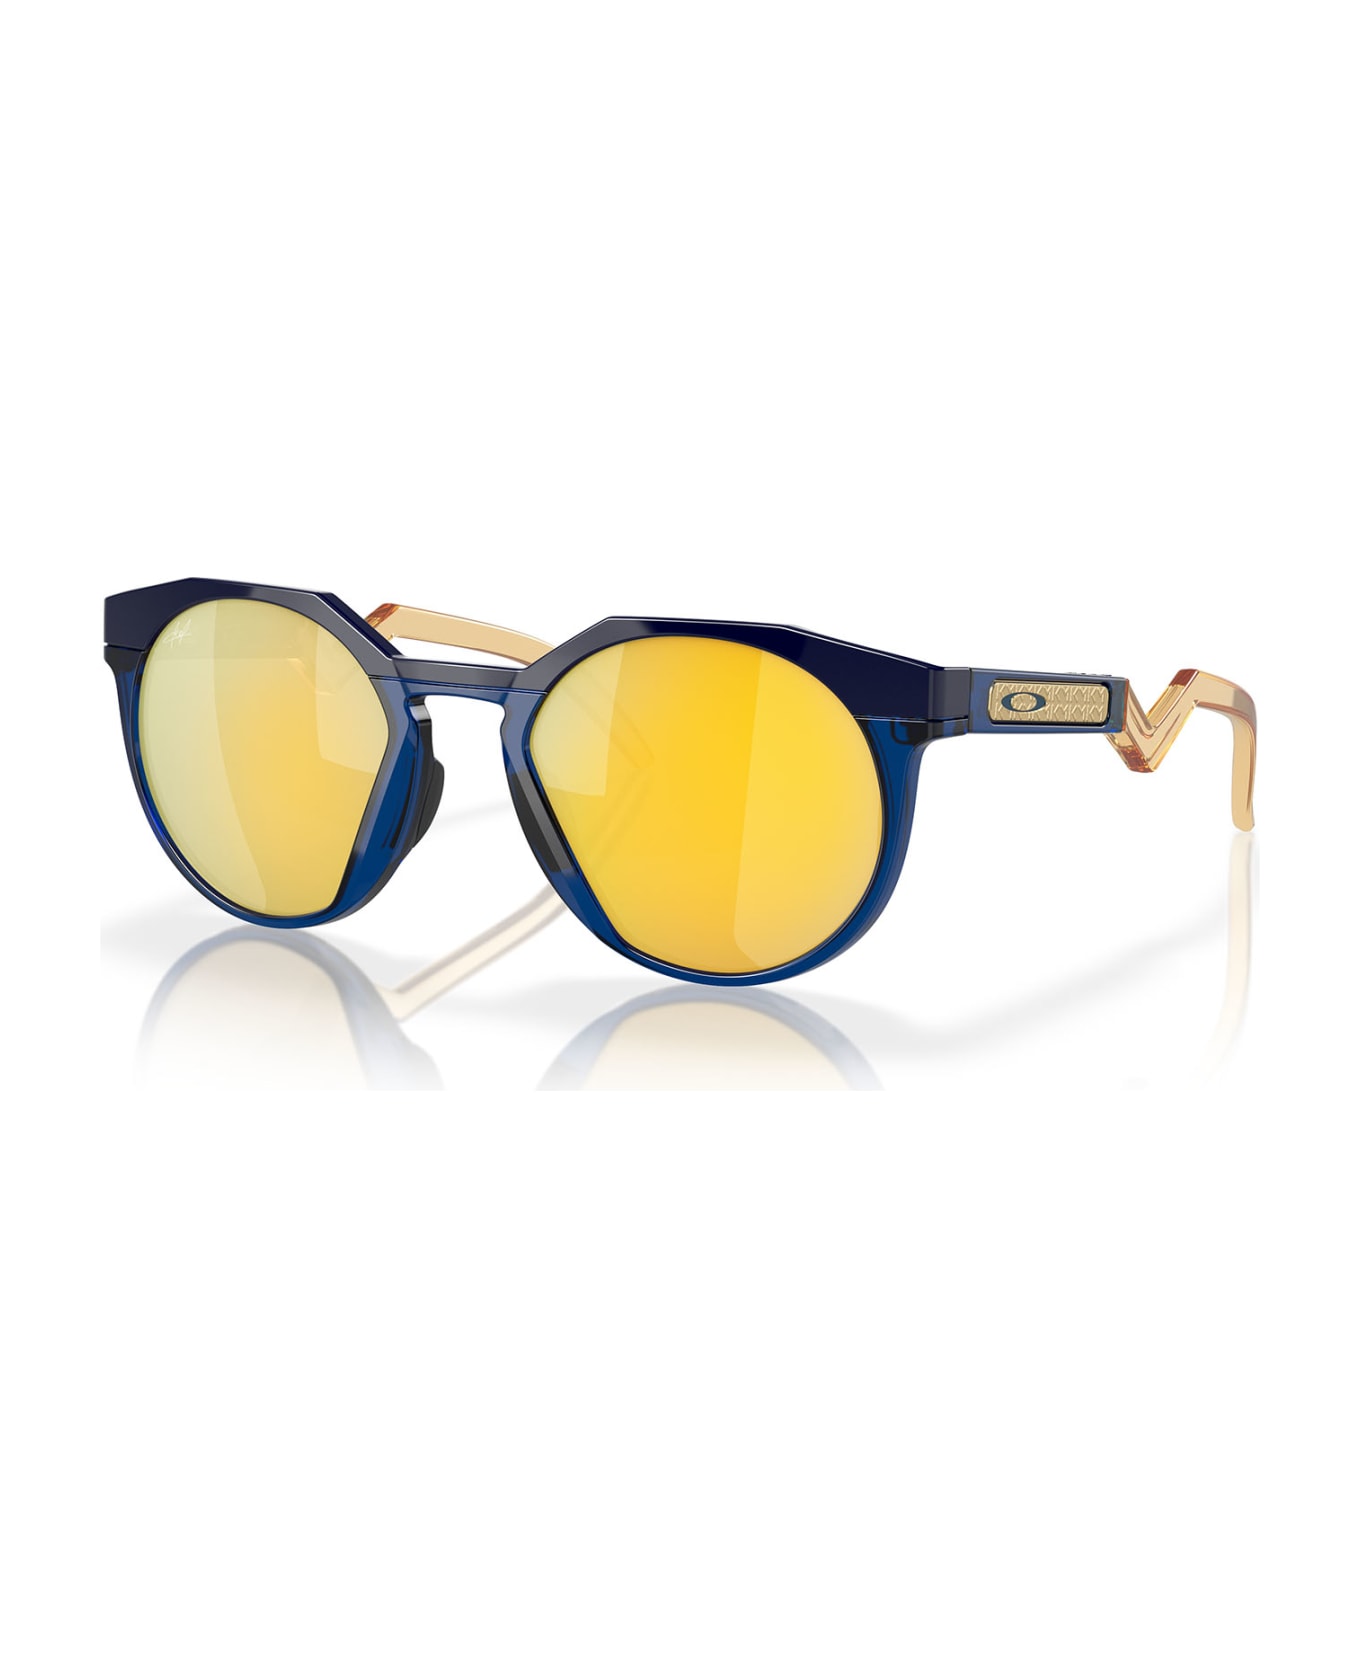 Oakley Oo9242 Navy / Transparent Blue Sunglasses - Navy / Transparent Blue